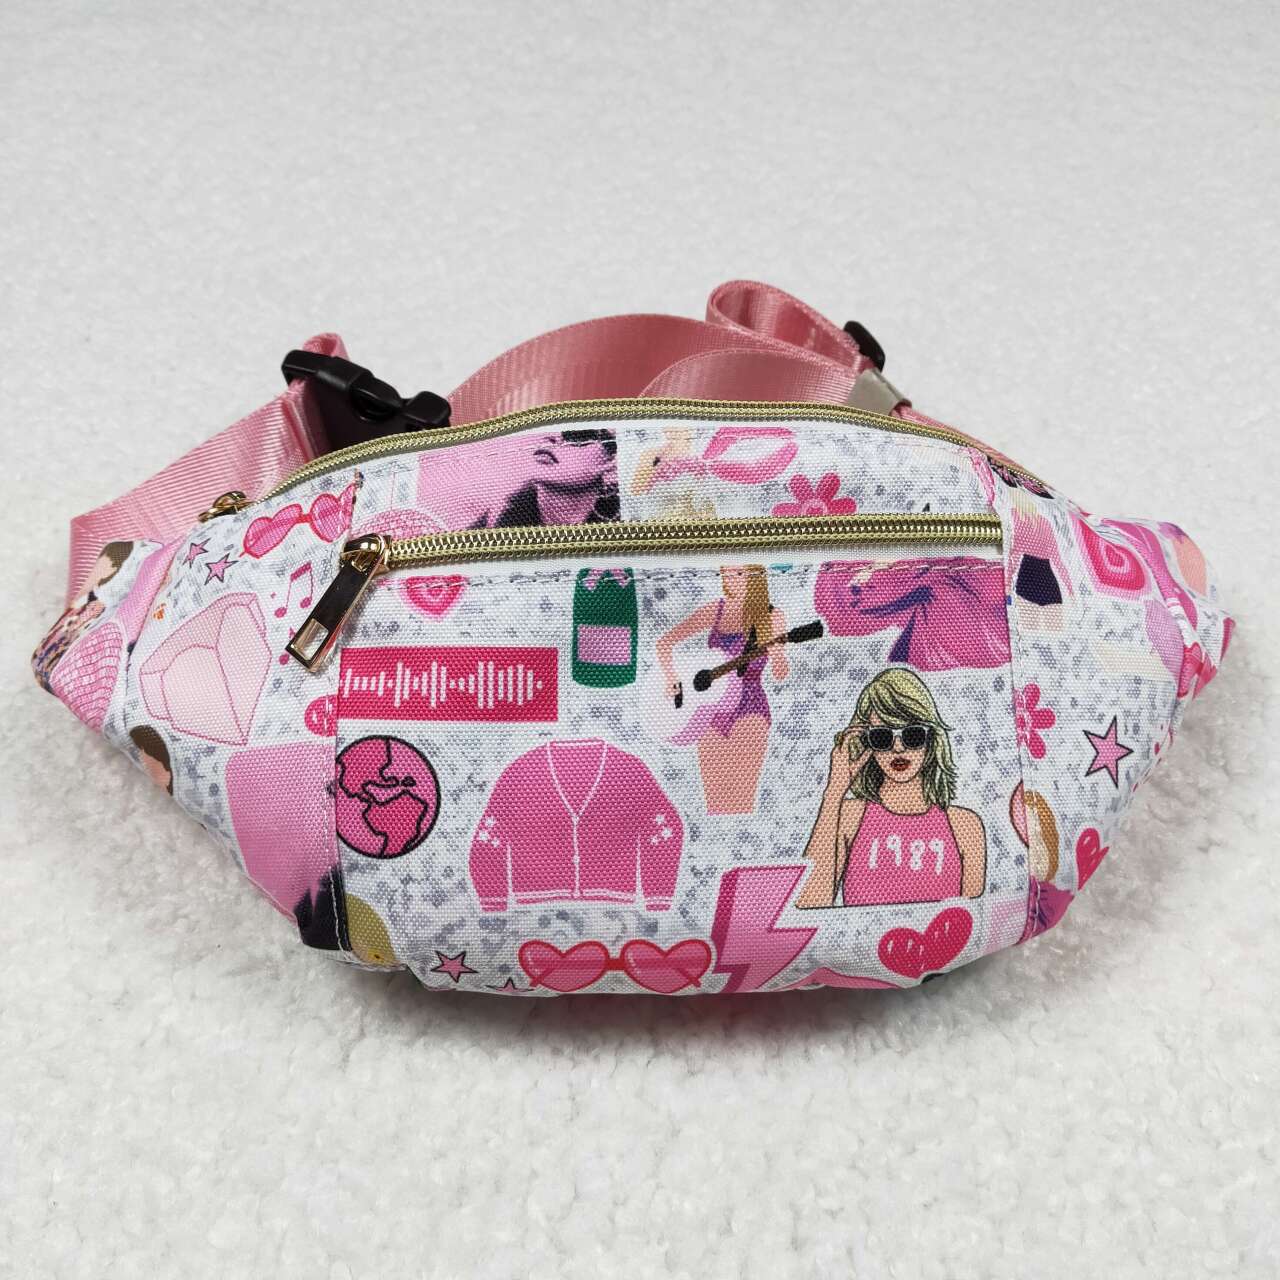 BA0165 Country singer hot pink bag